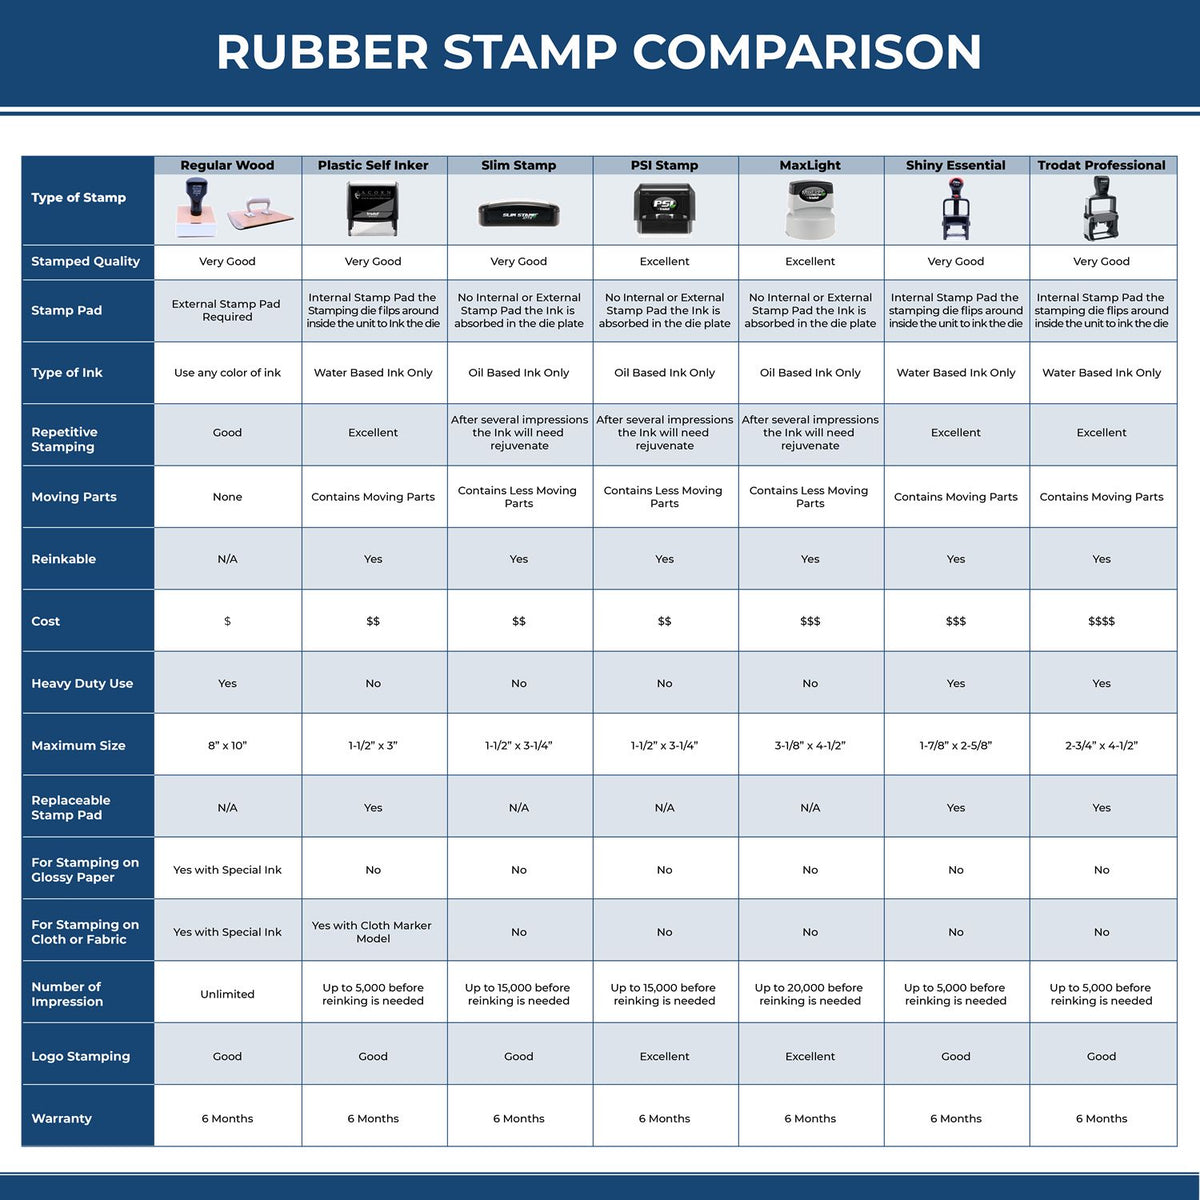 Deposition Exhibit Rubber Stamp 4315R Rubber Stamp Comparison